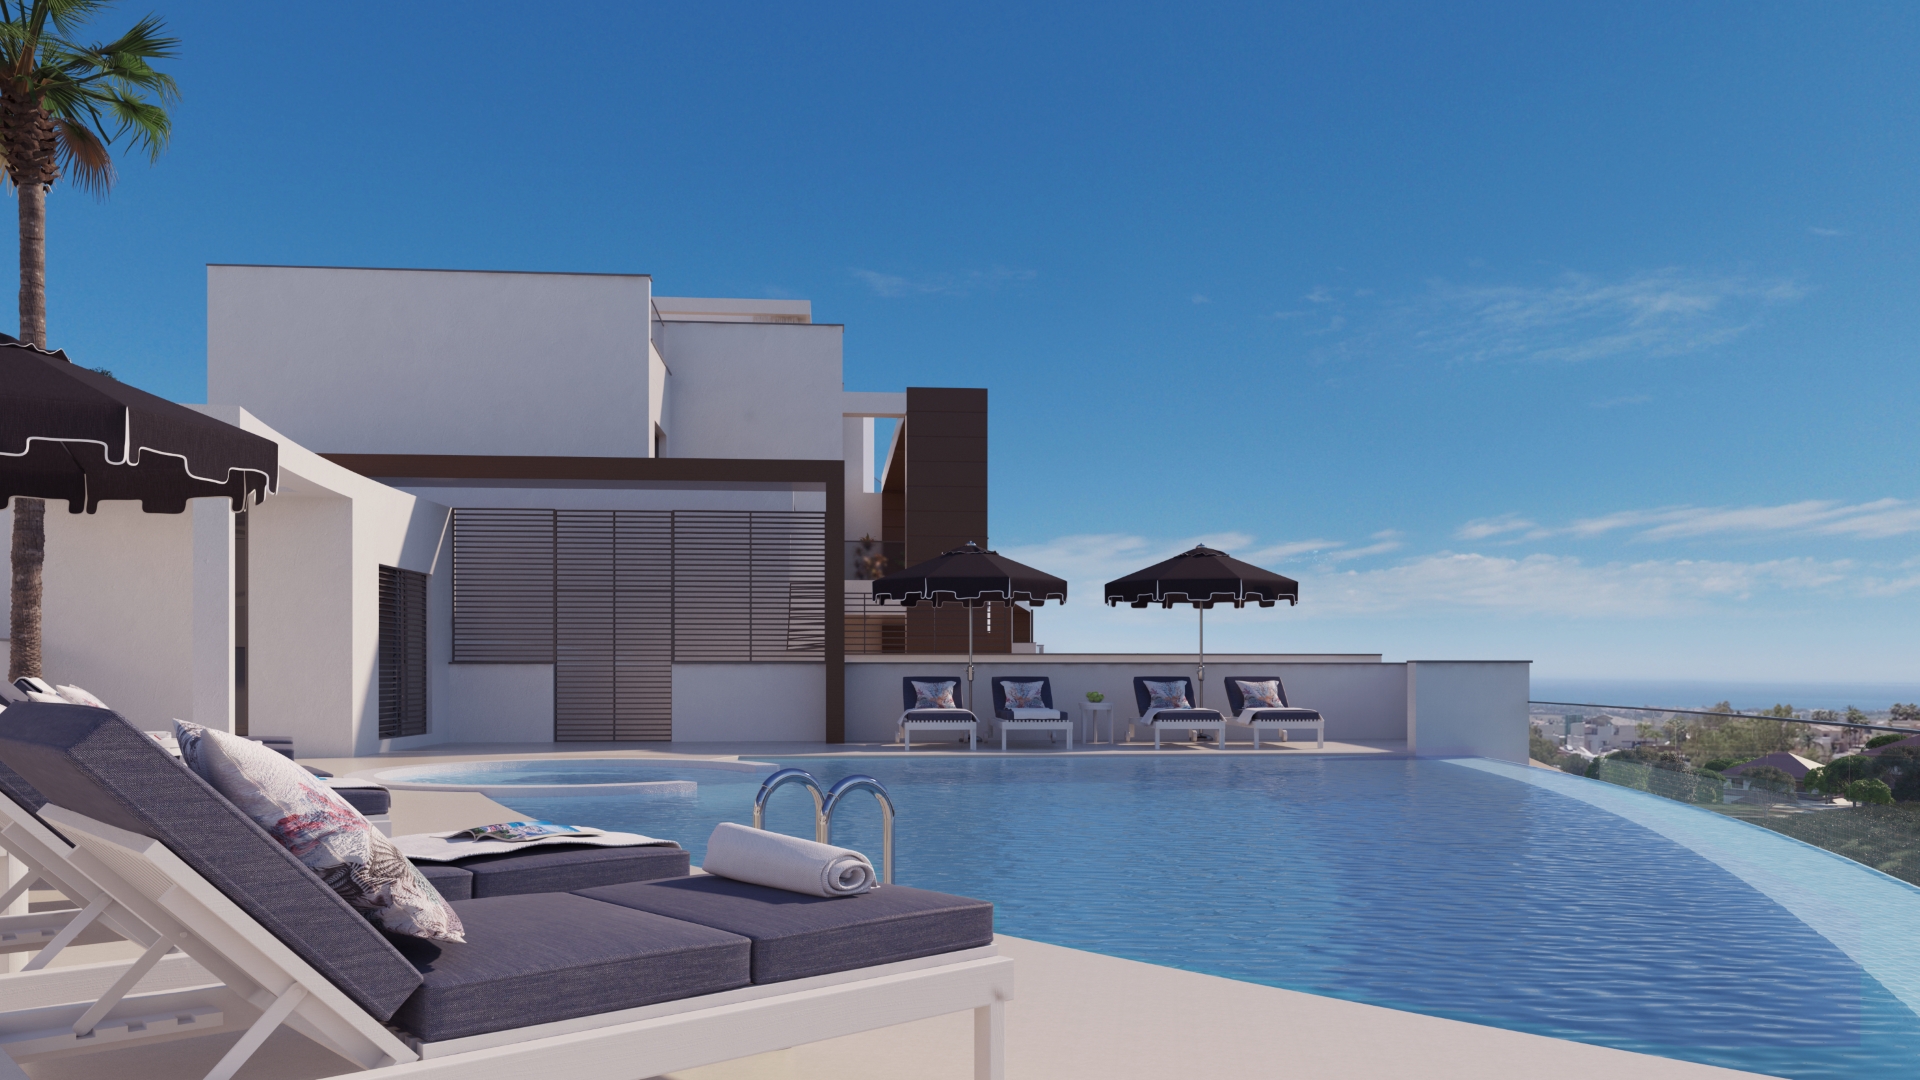 Alborada Homes - New development of off plan apartments and penthouses at Benahavis